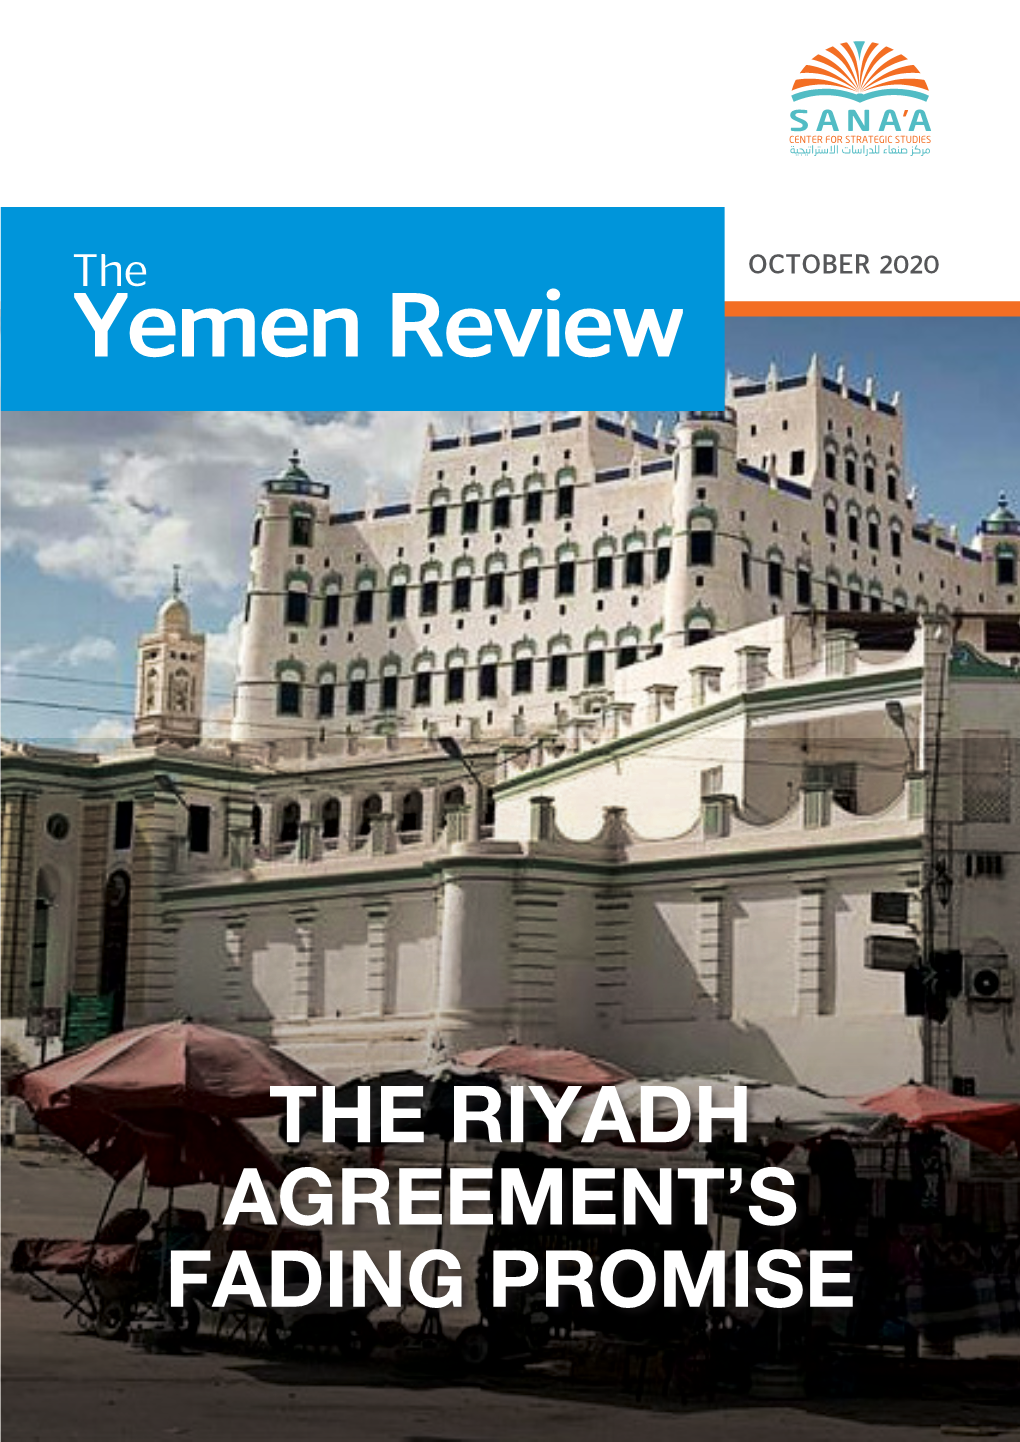 The Riyadh Agreement's Fading Promise